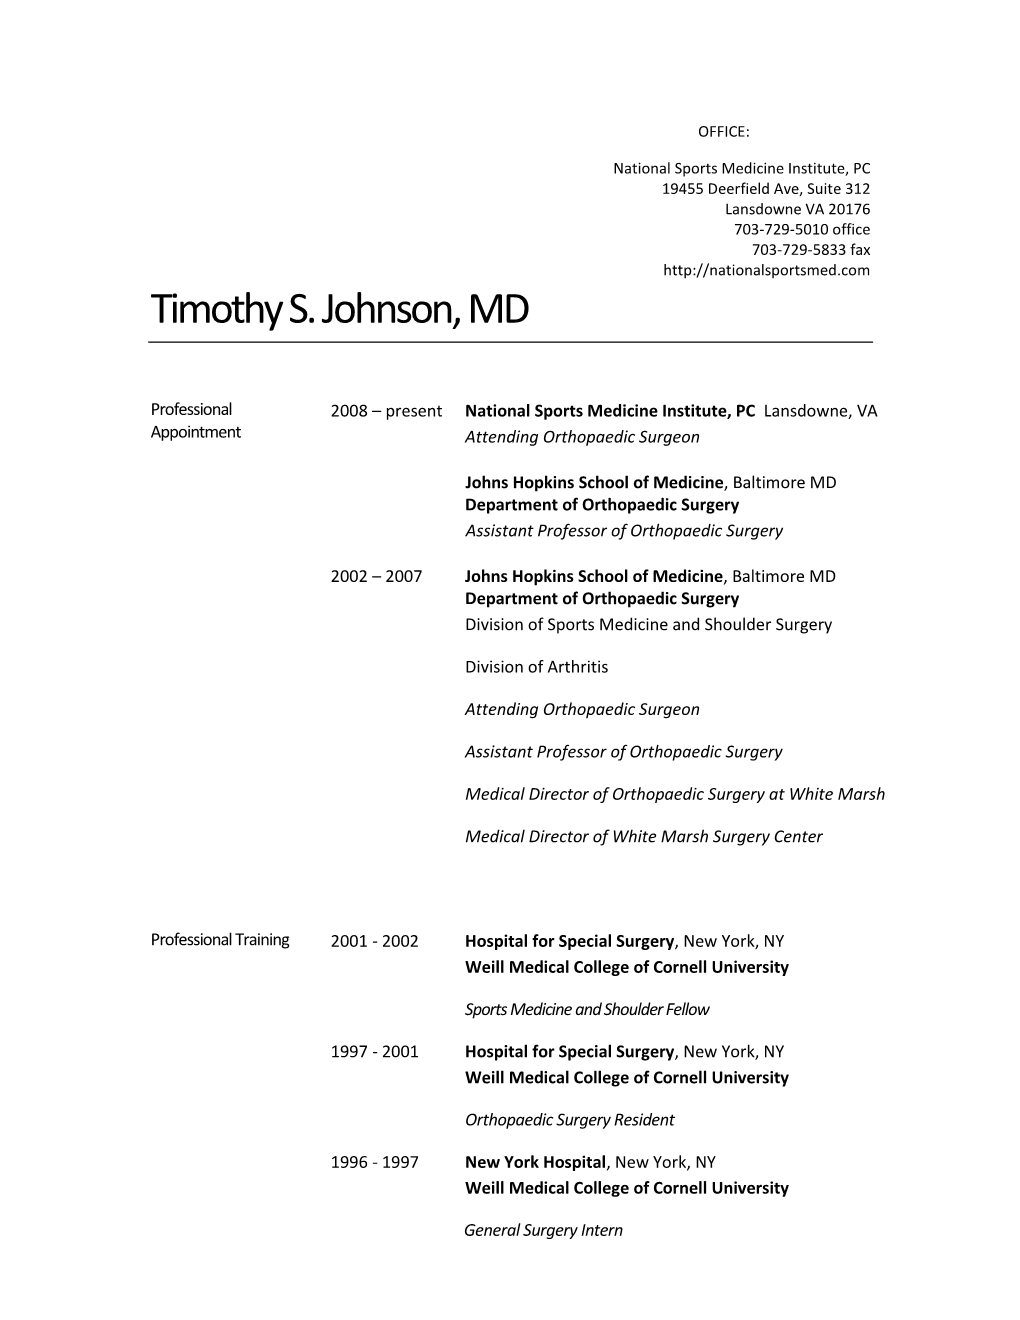 Timothy S. Johnson, MD